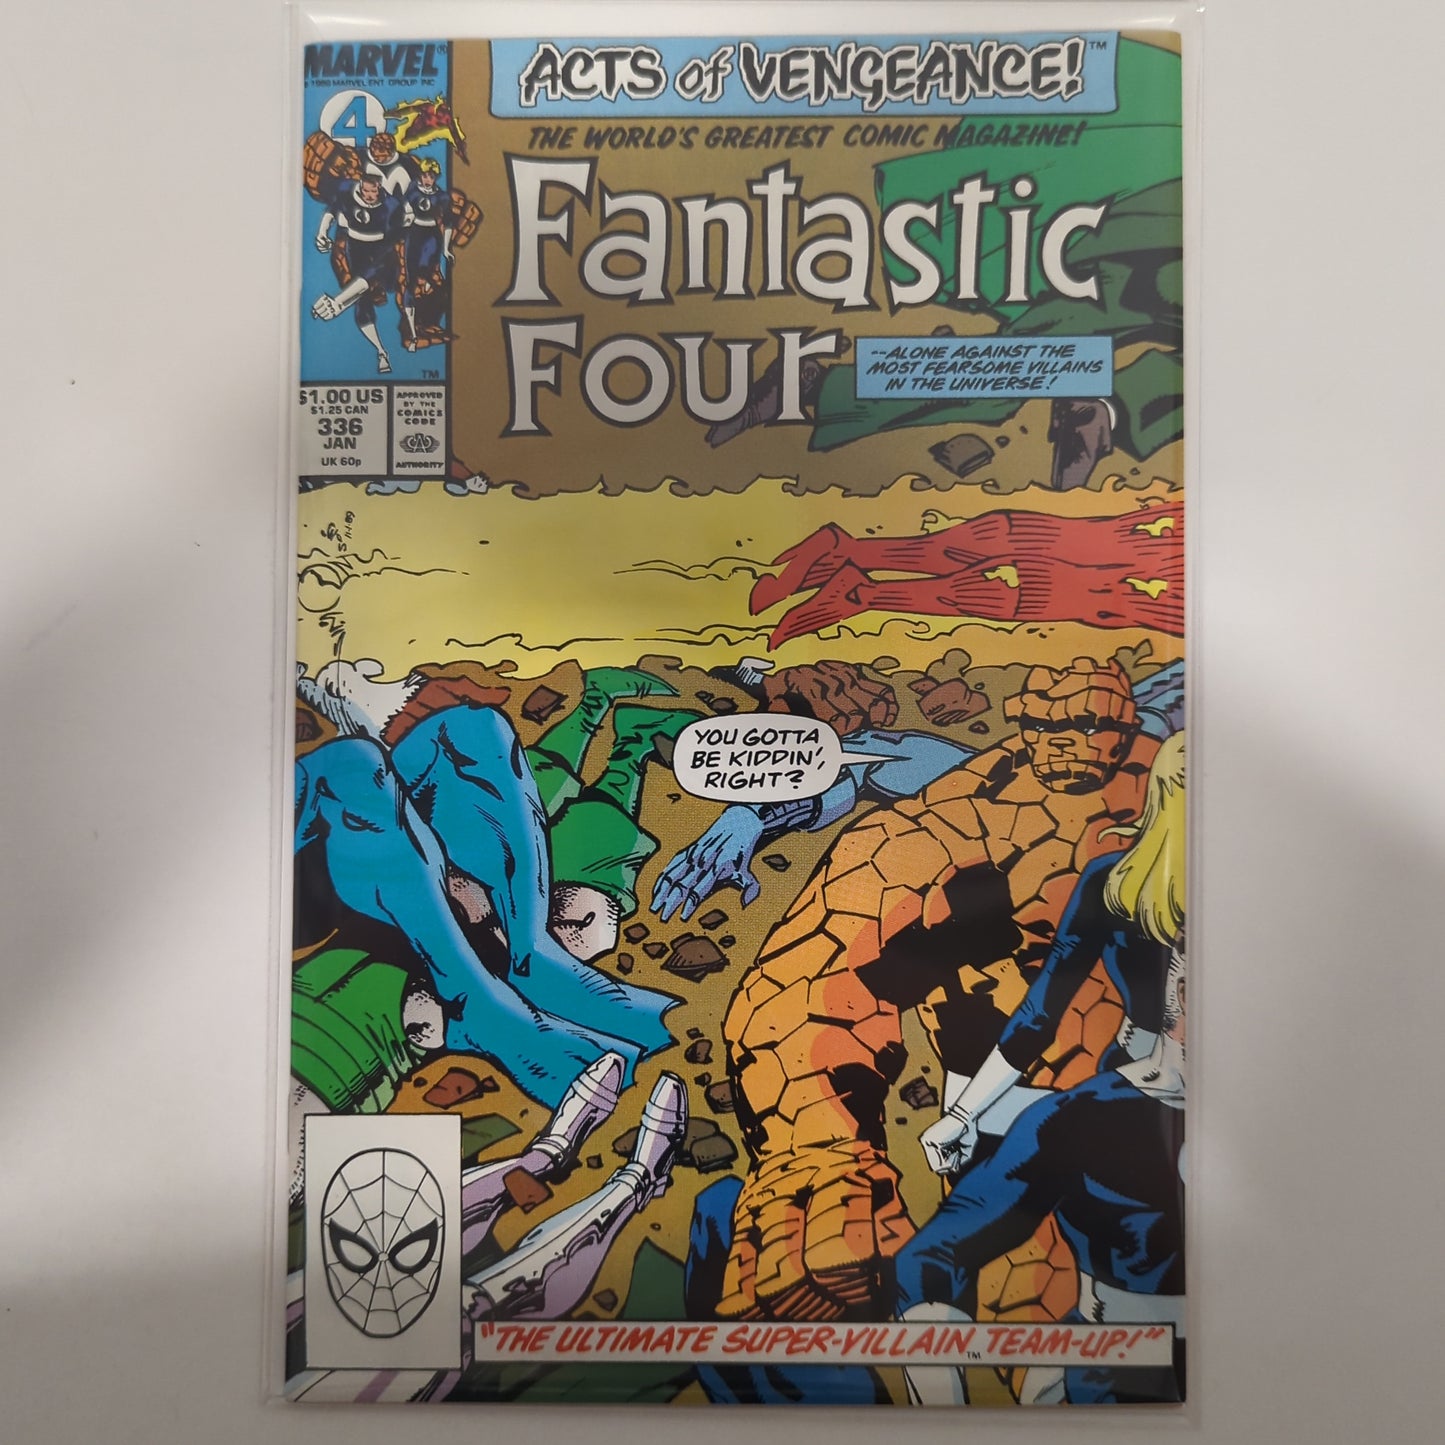 Fantastic Four #336